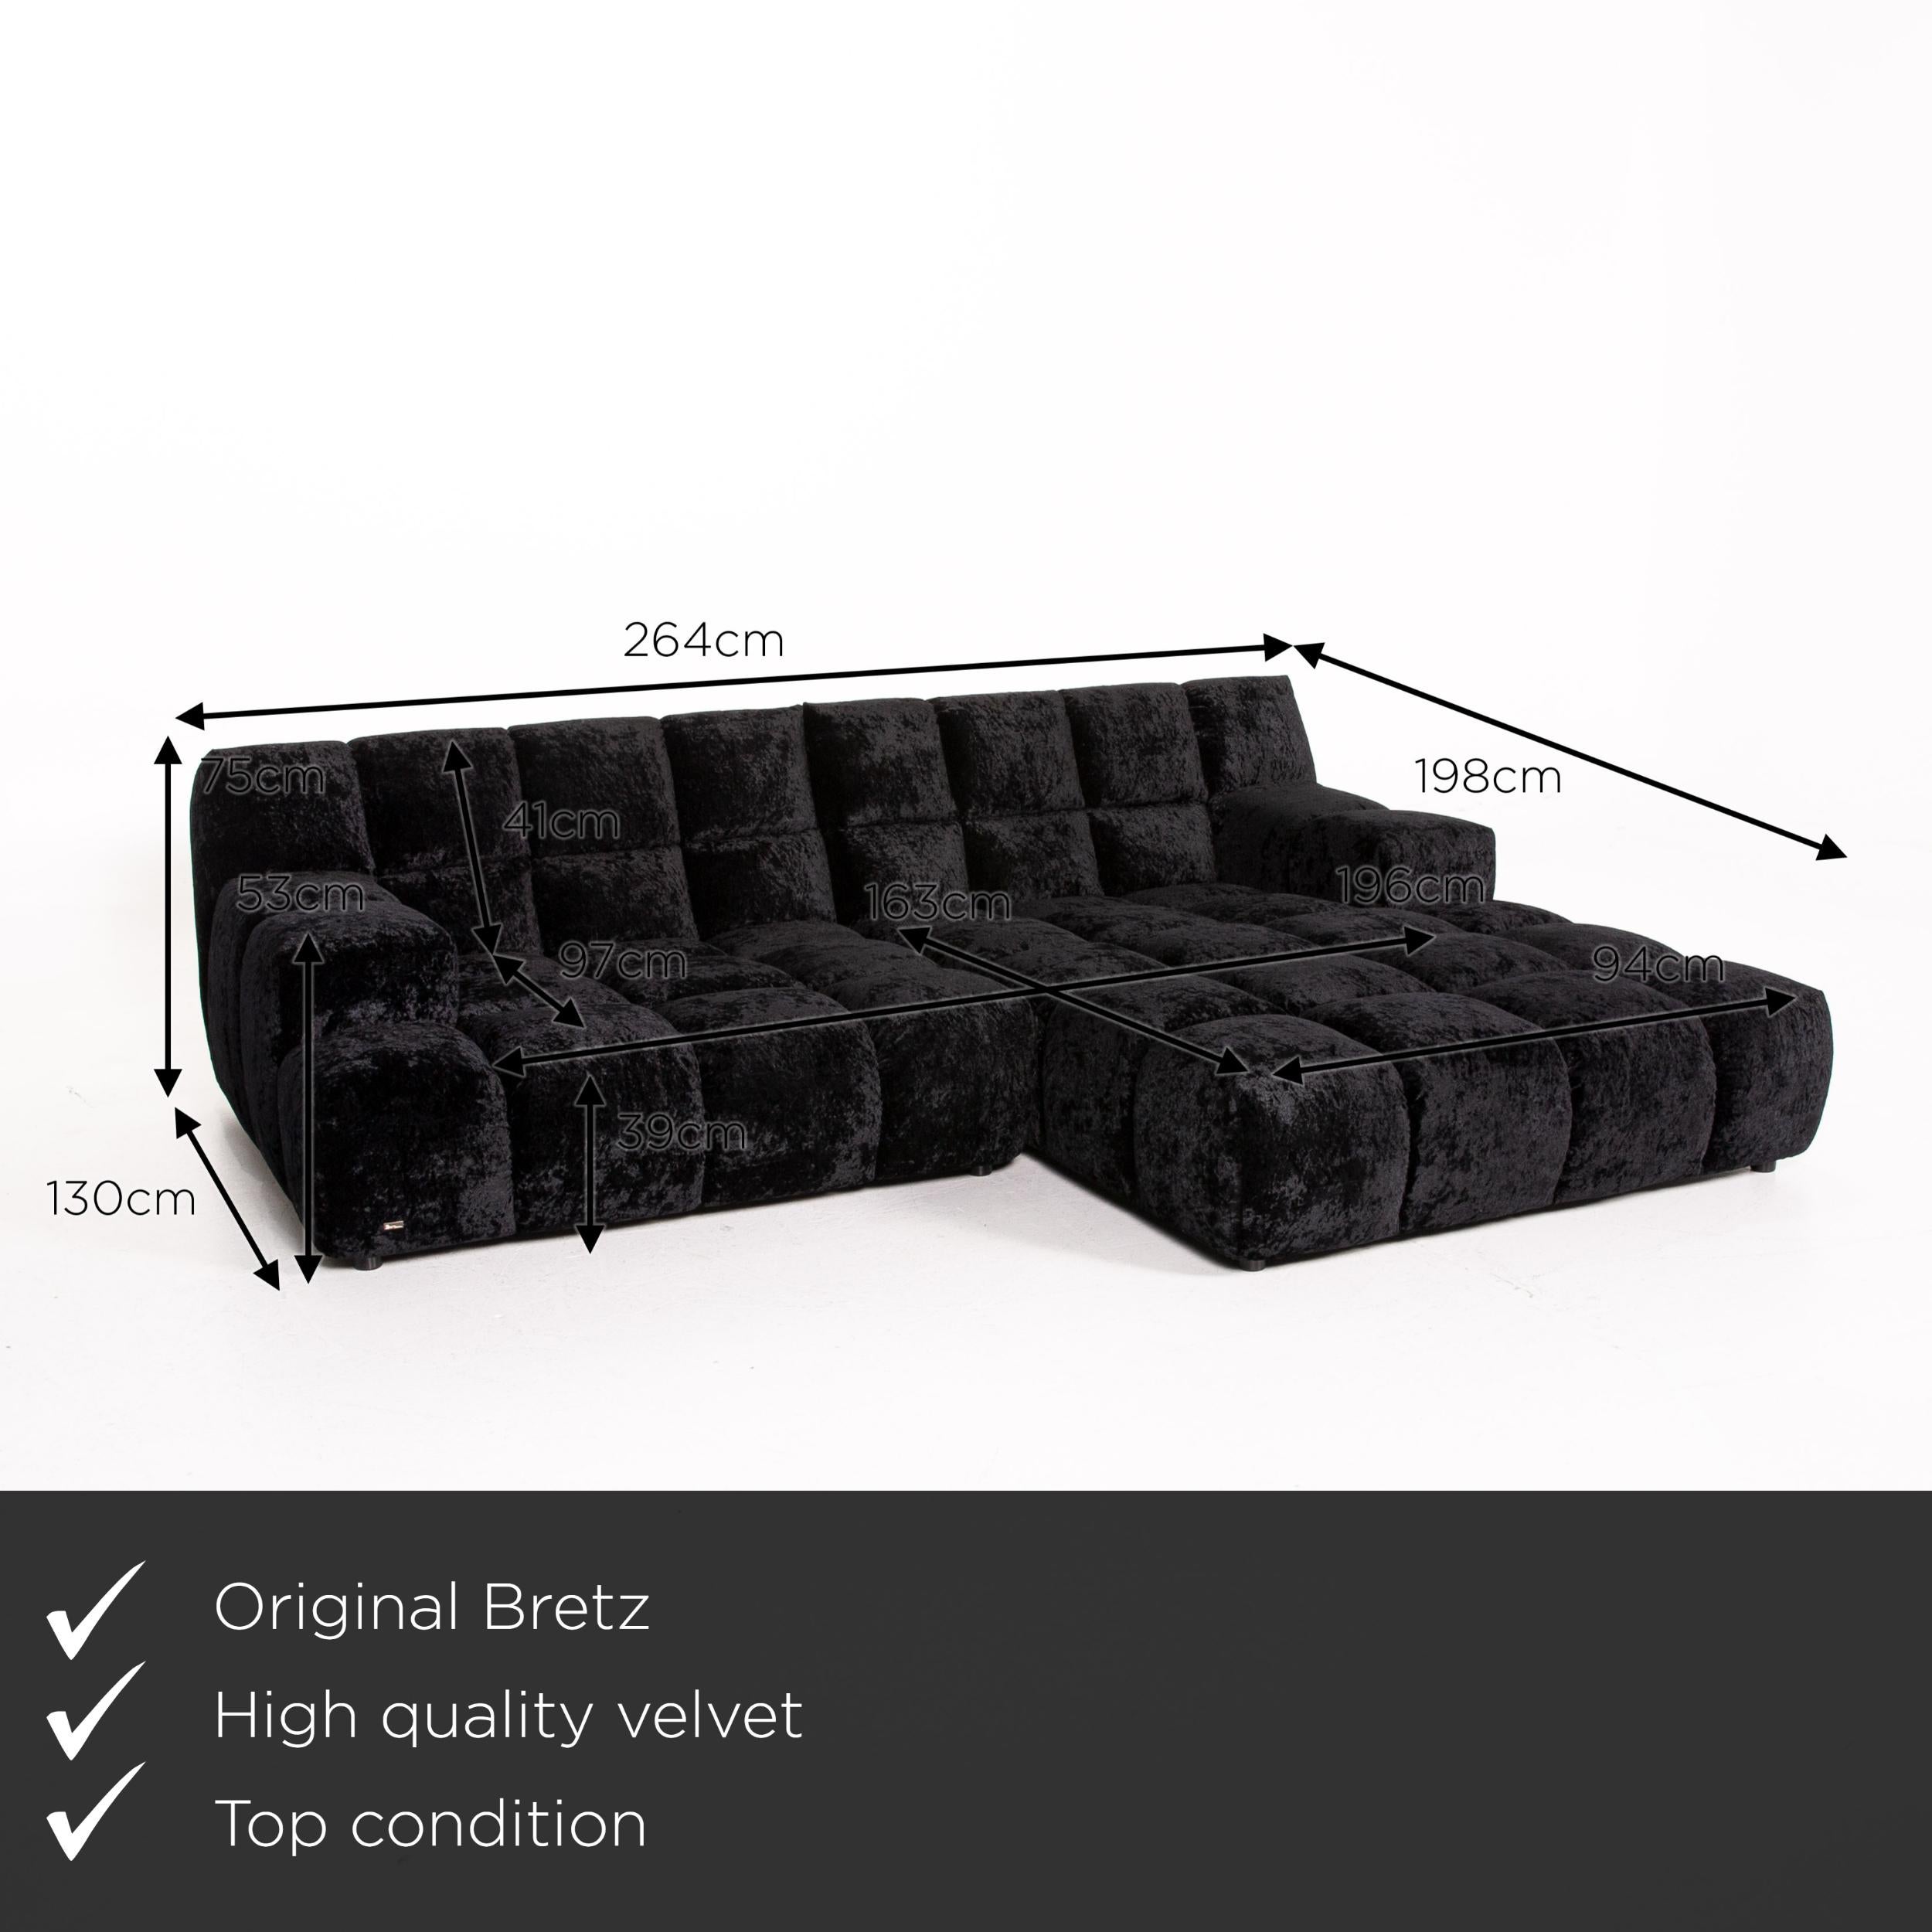 We present to you a Bretz ocean 7 velvet fabric corner sofa black sofa couch modular.

 

 Product measurements in centimeters:
 

Depth 198
Width 264
Height 75
Seat height 39
Rest height 53
Seat depth 97
Seat width 196
Back height